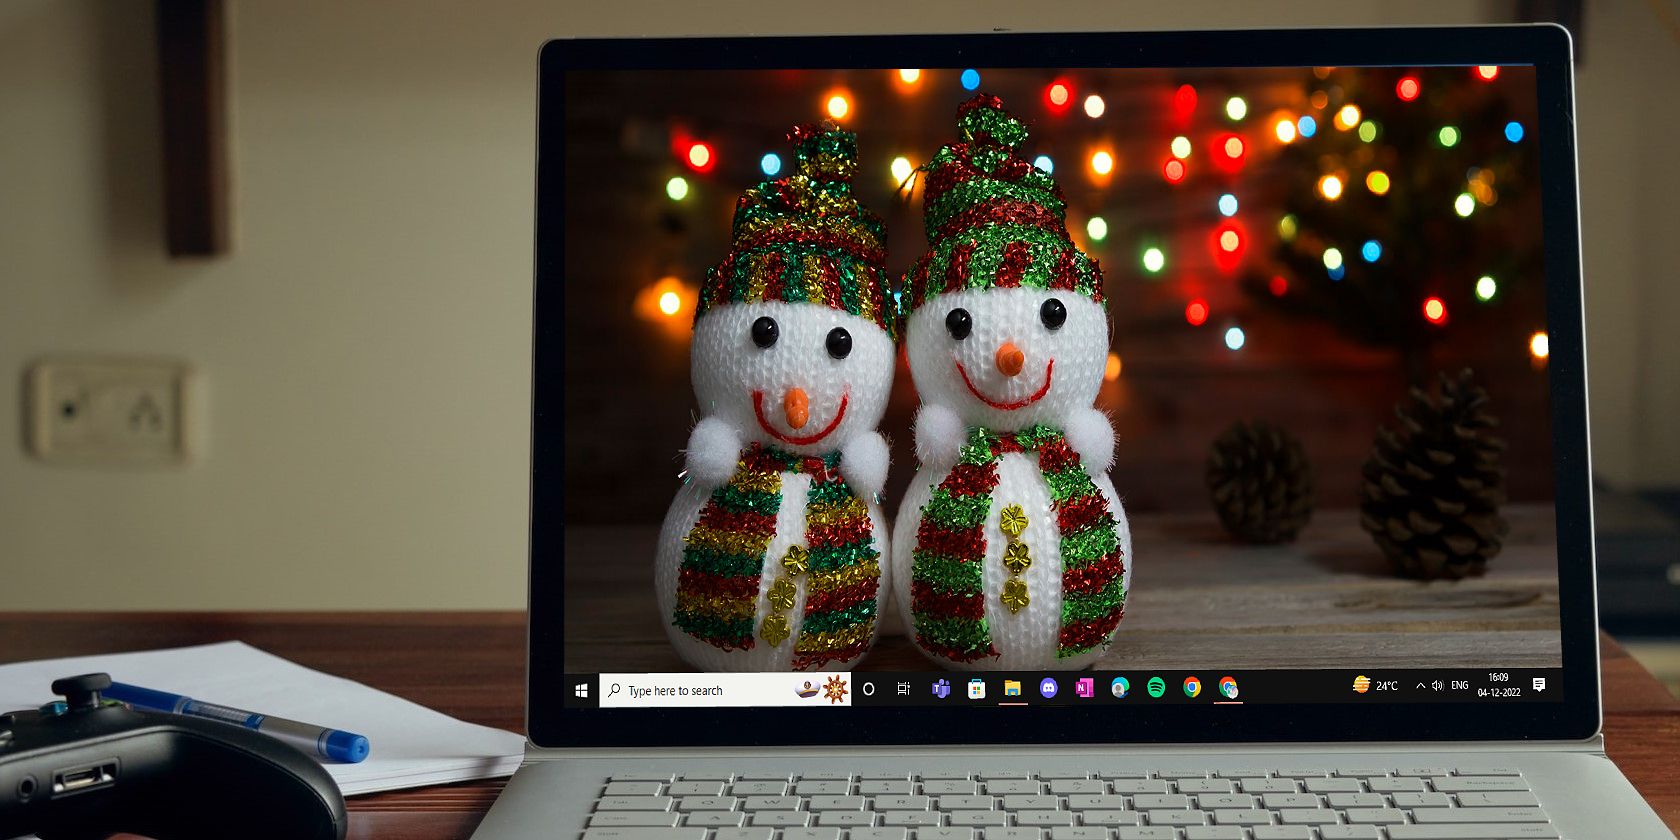 Snowman Christmas Theme on Windows Laptop Screen